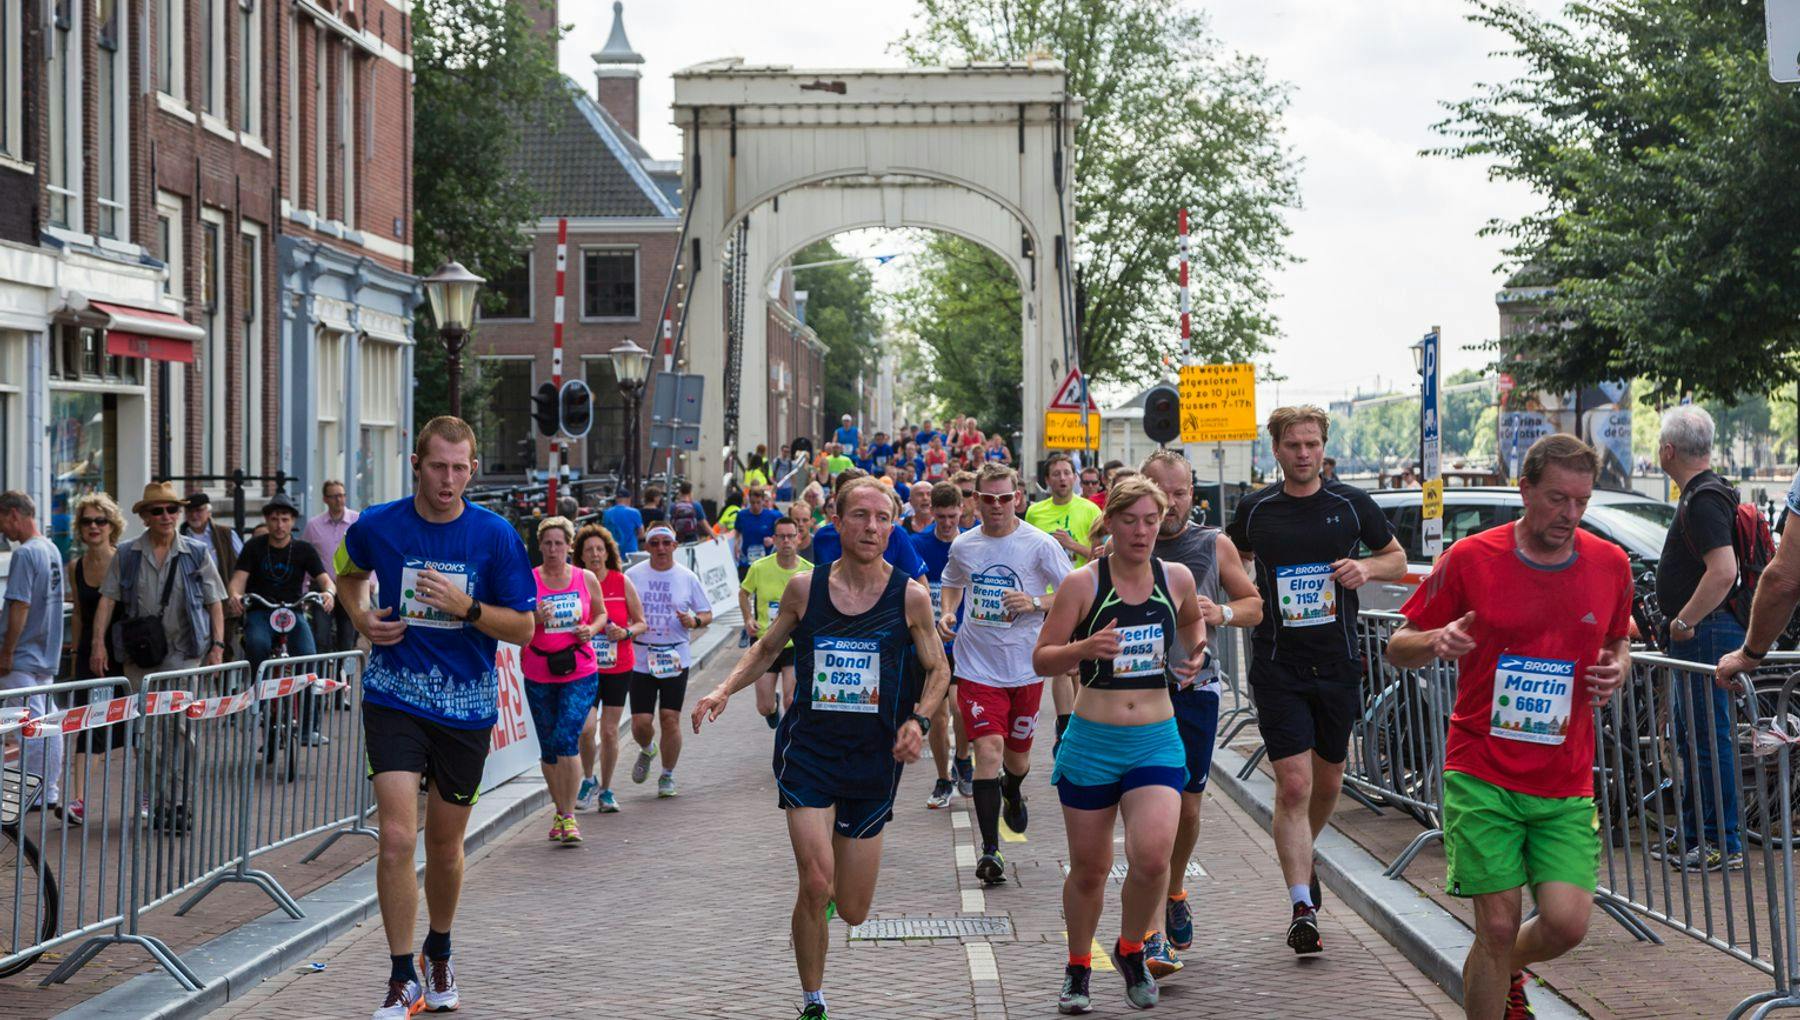 AMSTERDAM, THE NETHERLANDS - JUNE 16, 2016: The Amsterdam Marathon in Amsterdam in a beautiful summer day, The Netherlands on June 16, 2016
720216703
Runners at the TCS Amsterdam Marathon 2016. Shutterstock